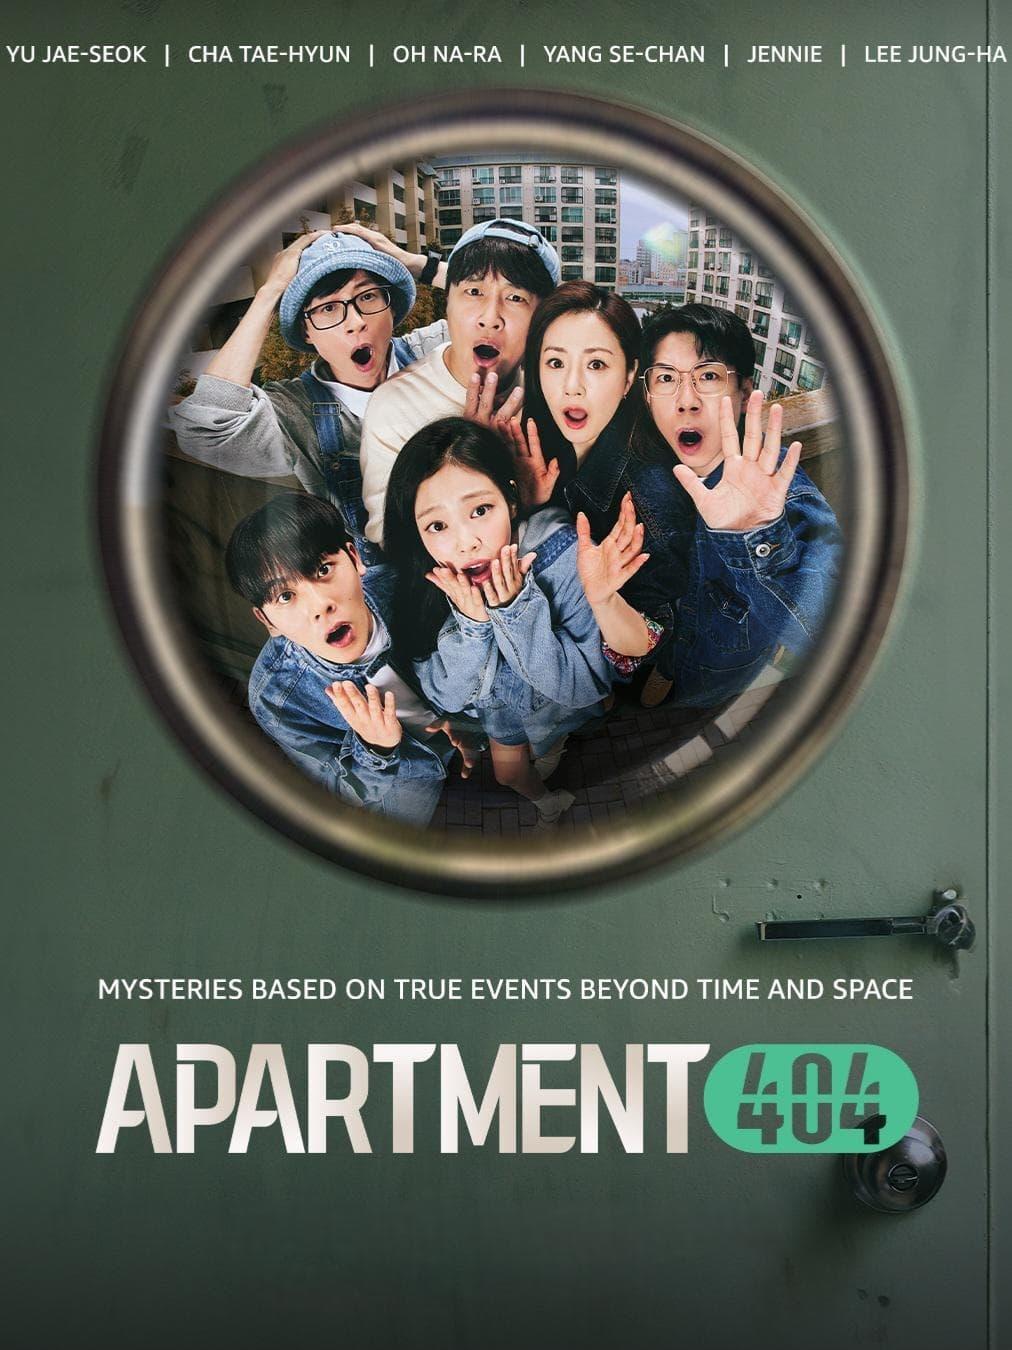 Apartment 404 poster